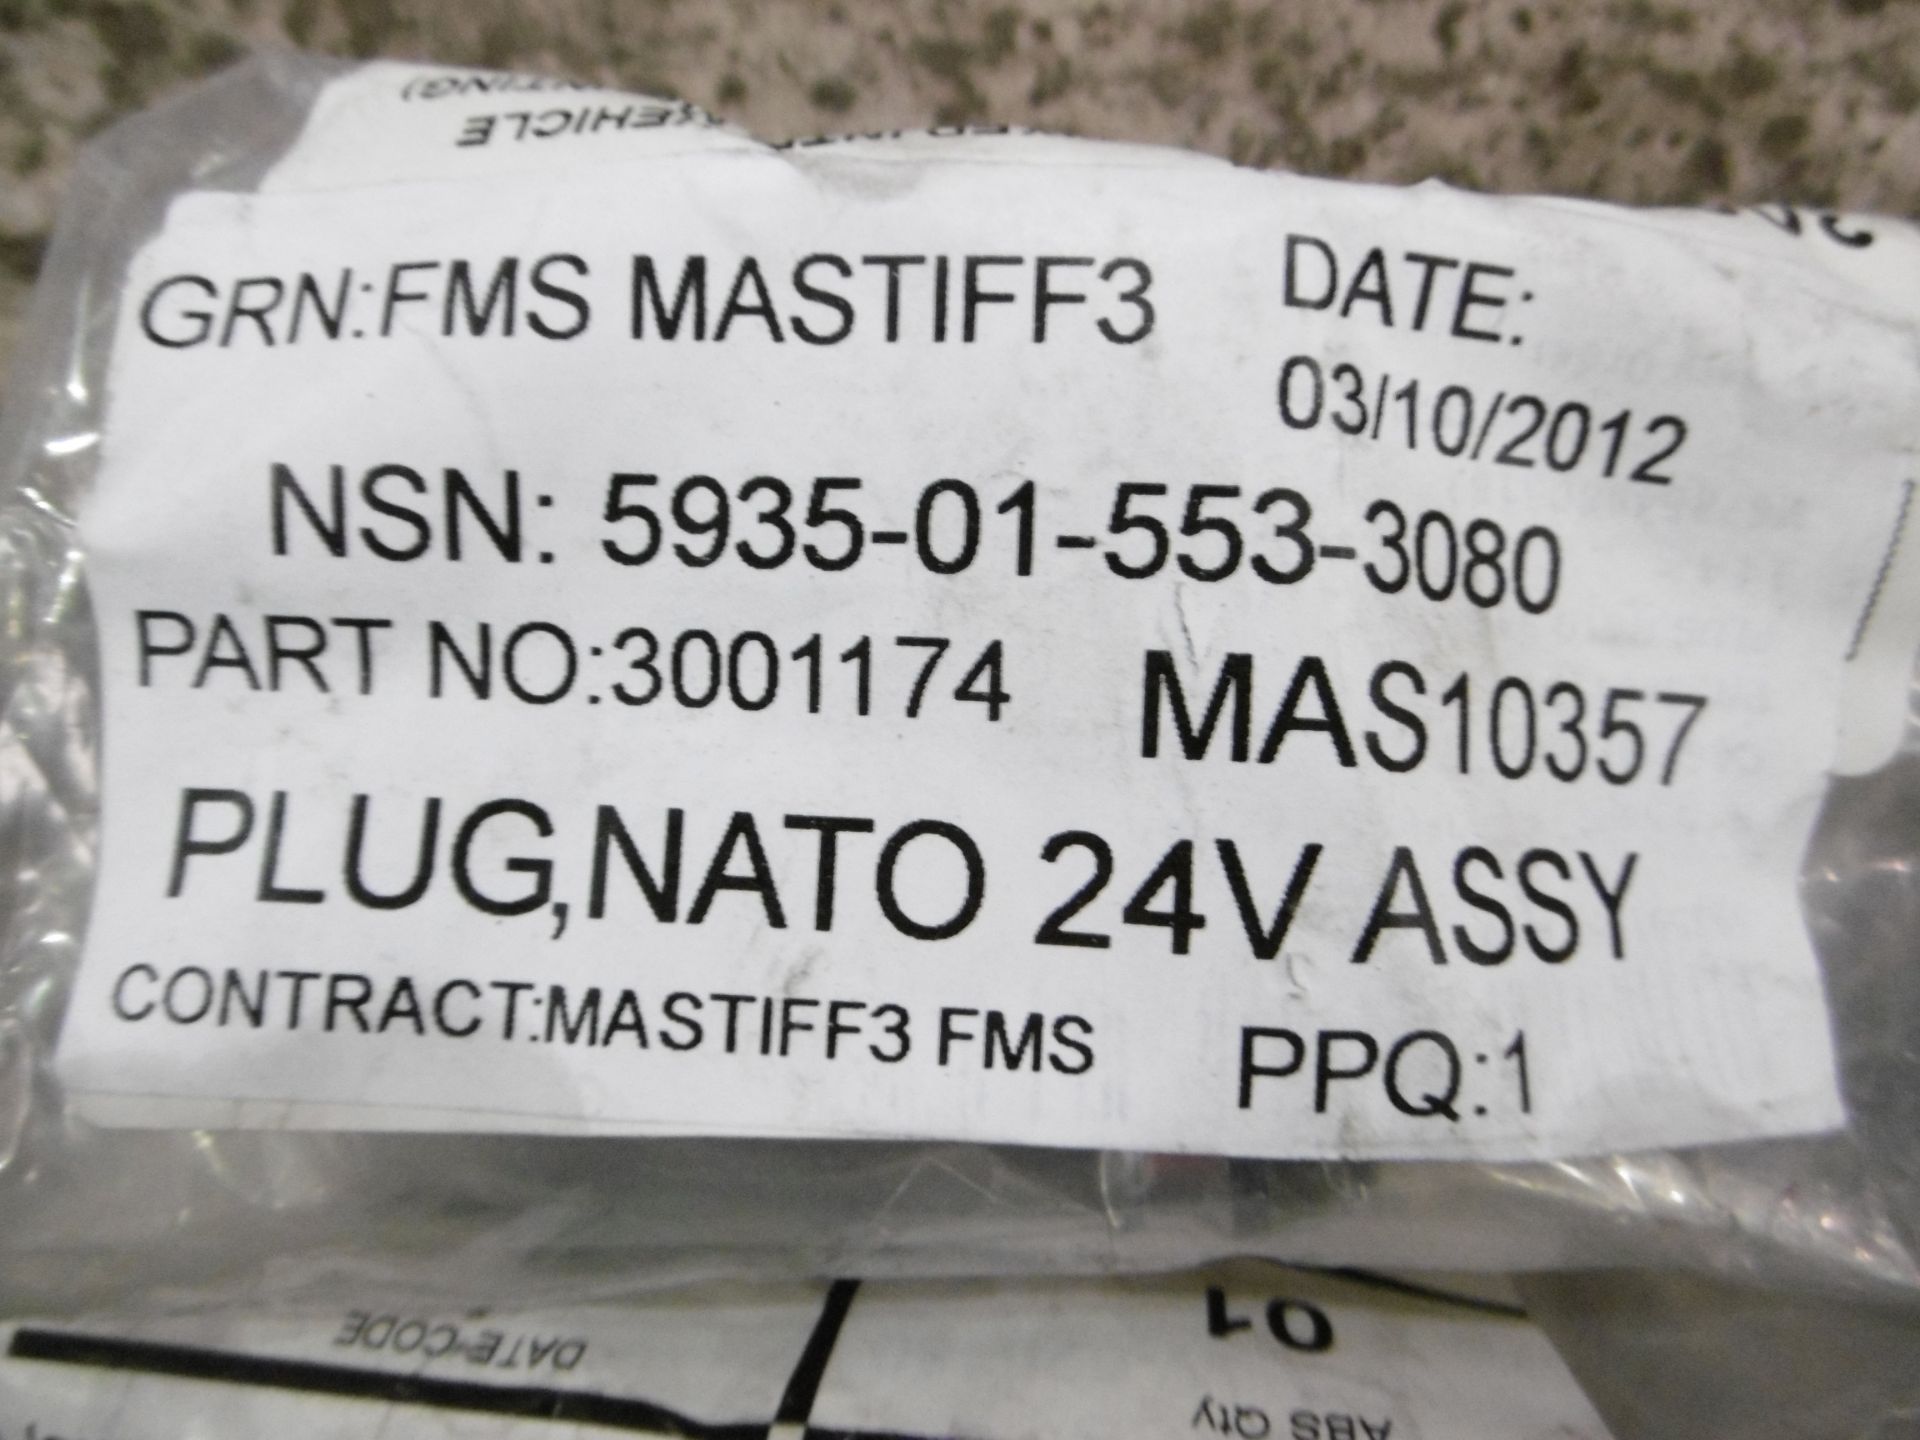 3 x NATO 24v Plug Assys - Image 2 of 5